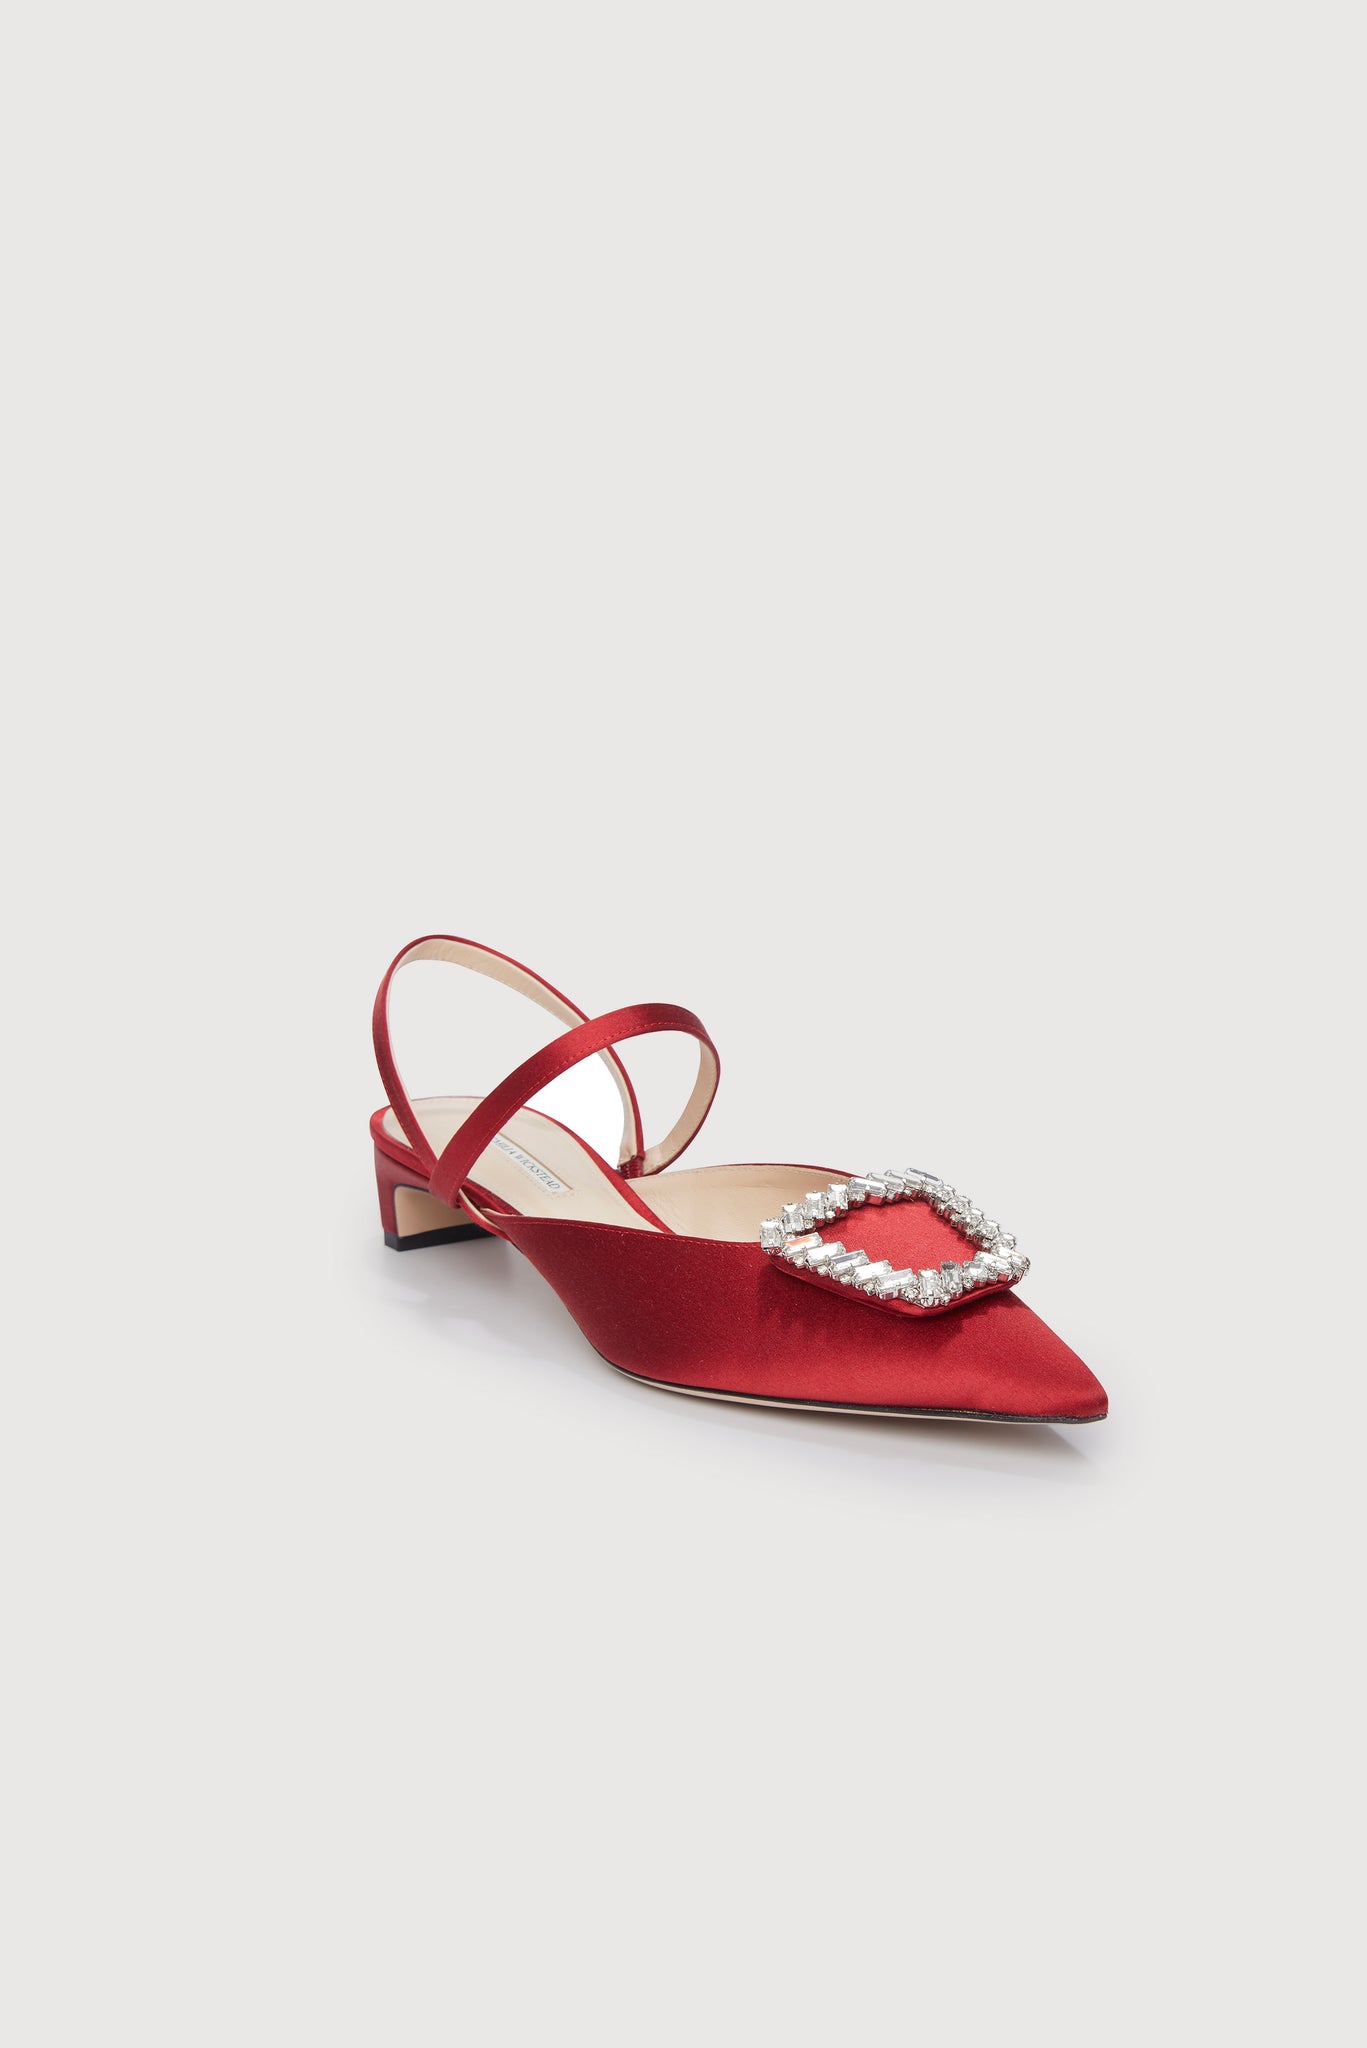 Katrina Red Satin Jewel Buckle Kitten Heel Shoes | Emilia Wickstead